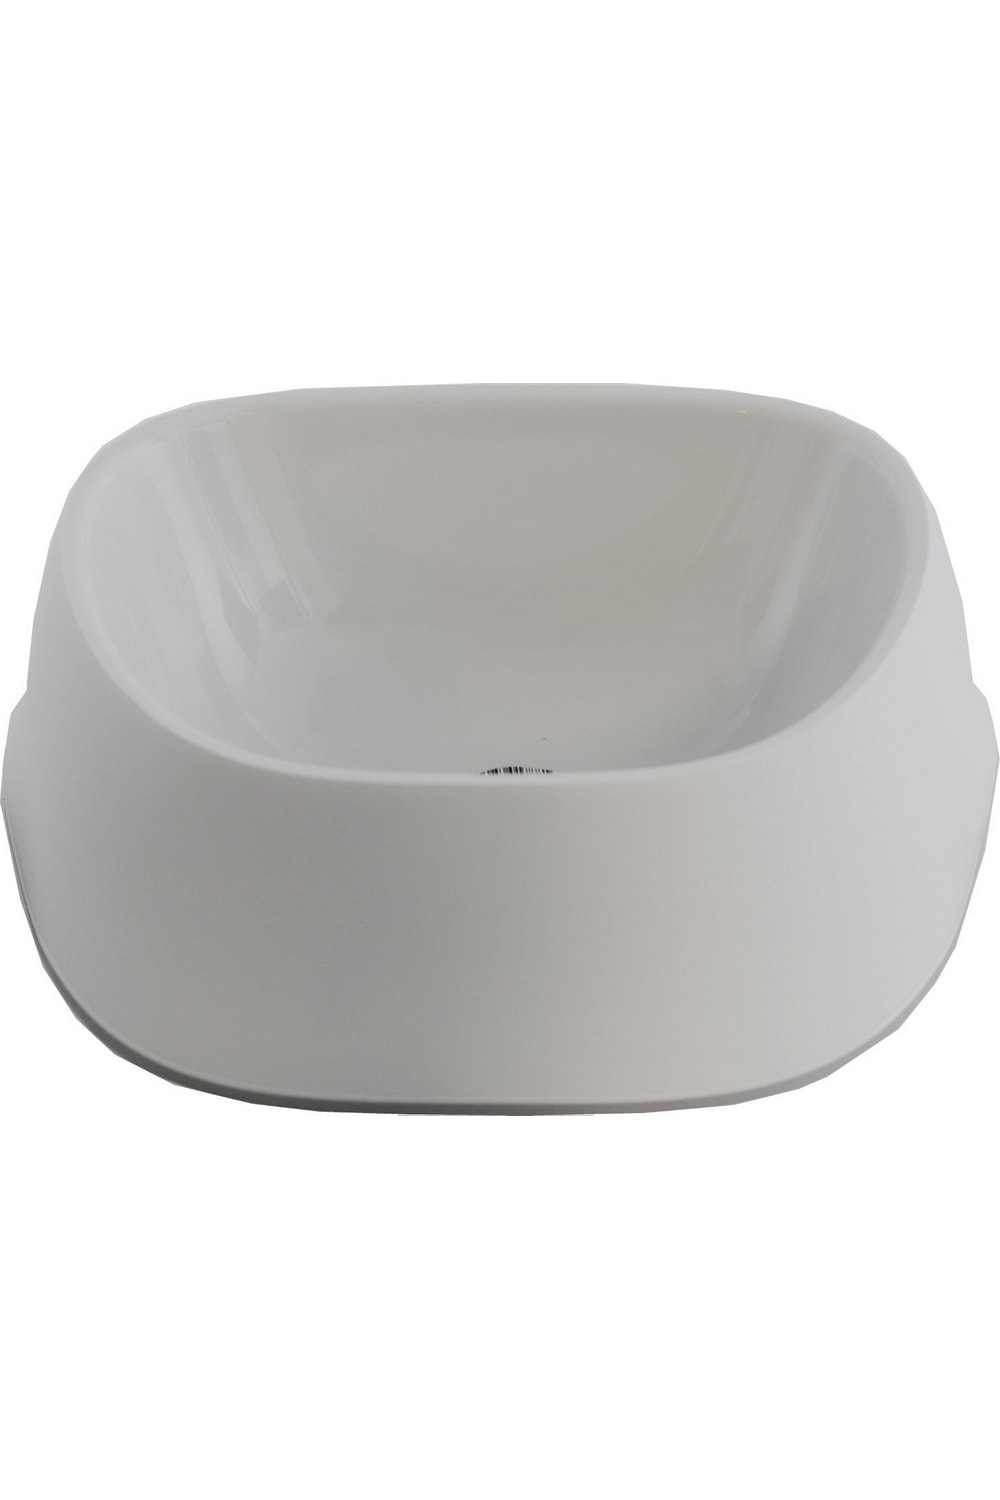 Moderna Sensibowl Dog Bowl (White) (3.87pint)